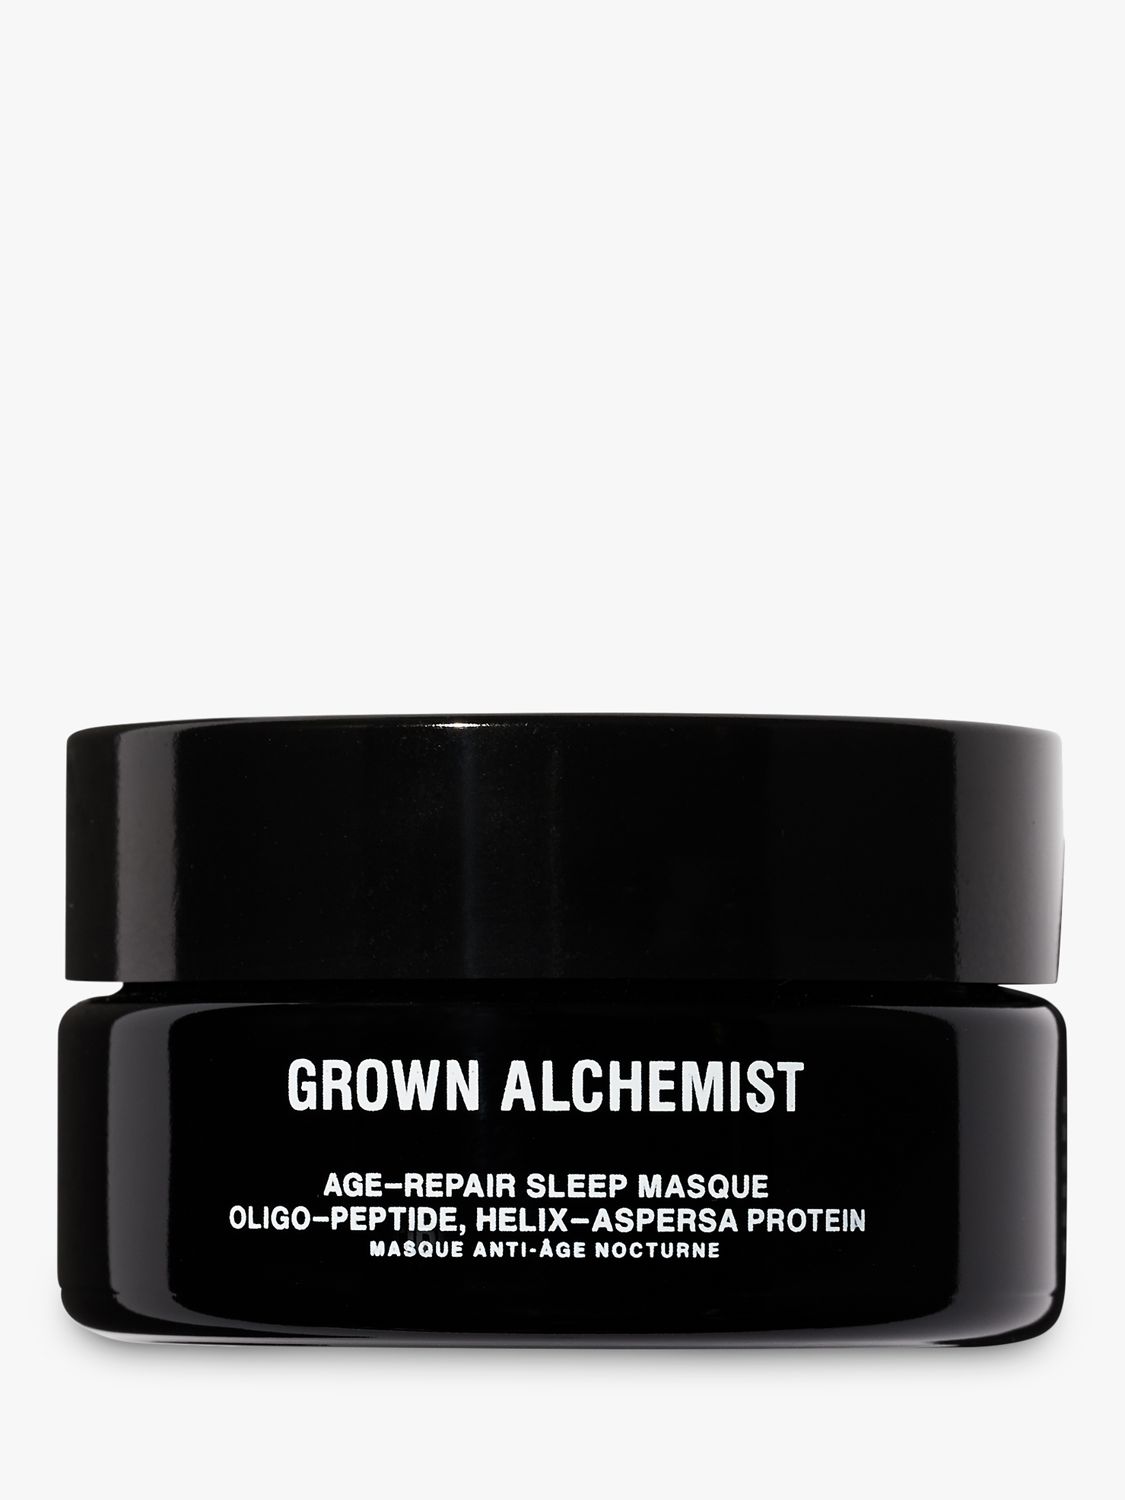 Grown Alchemist Age-Repair Sleep Masque: Oligo-Peptide, Helix-Aspersa Protein, 40ml 1